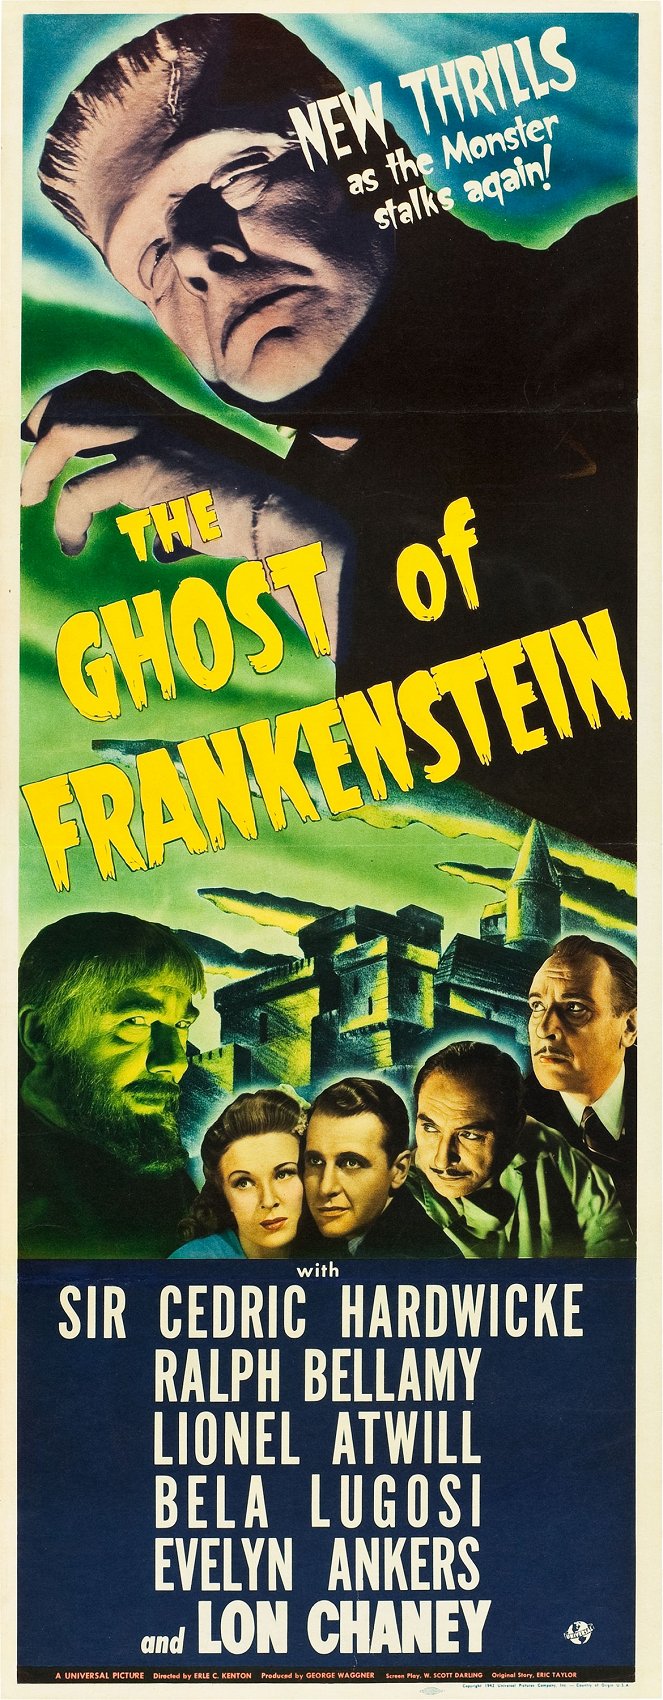 A Sombra de Frankenstein - Cartazes